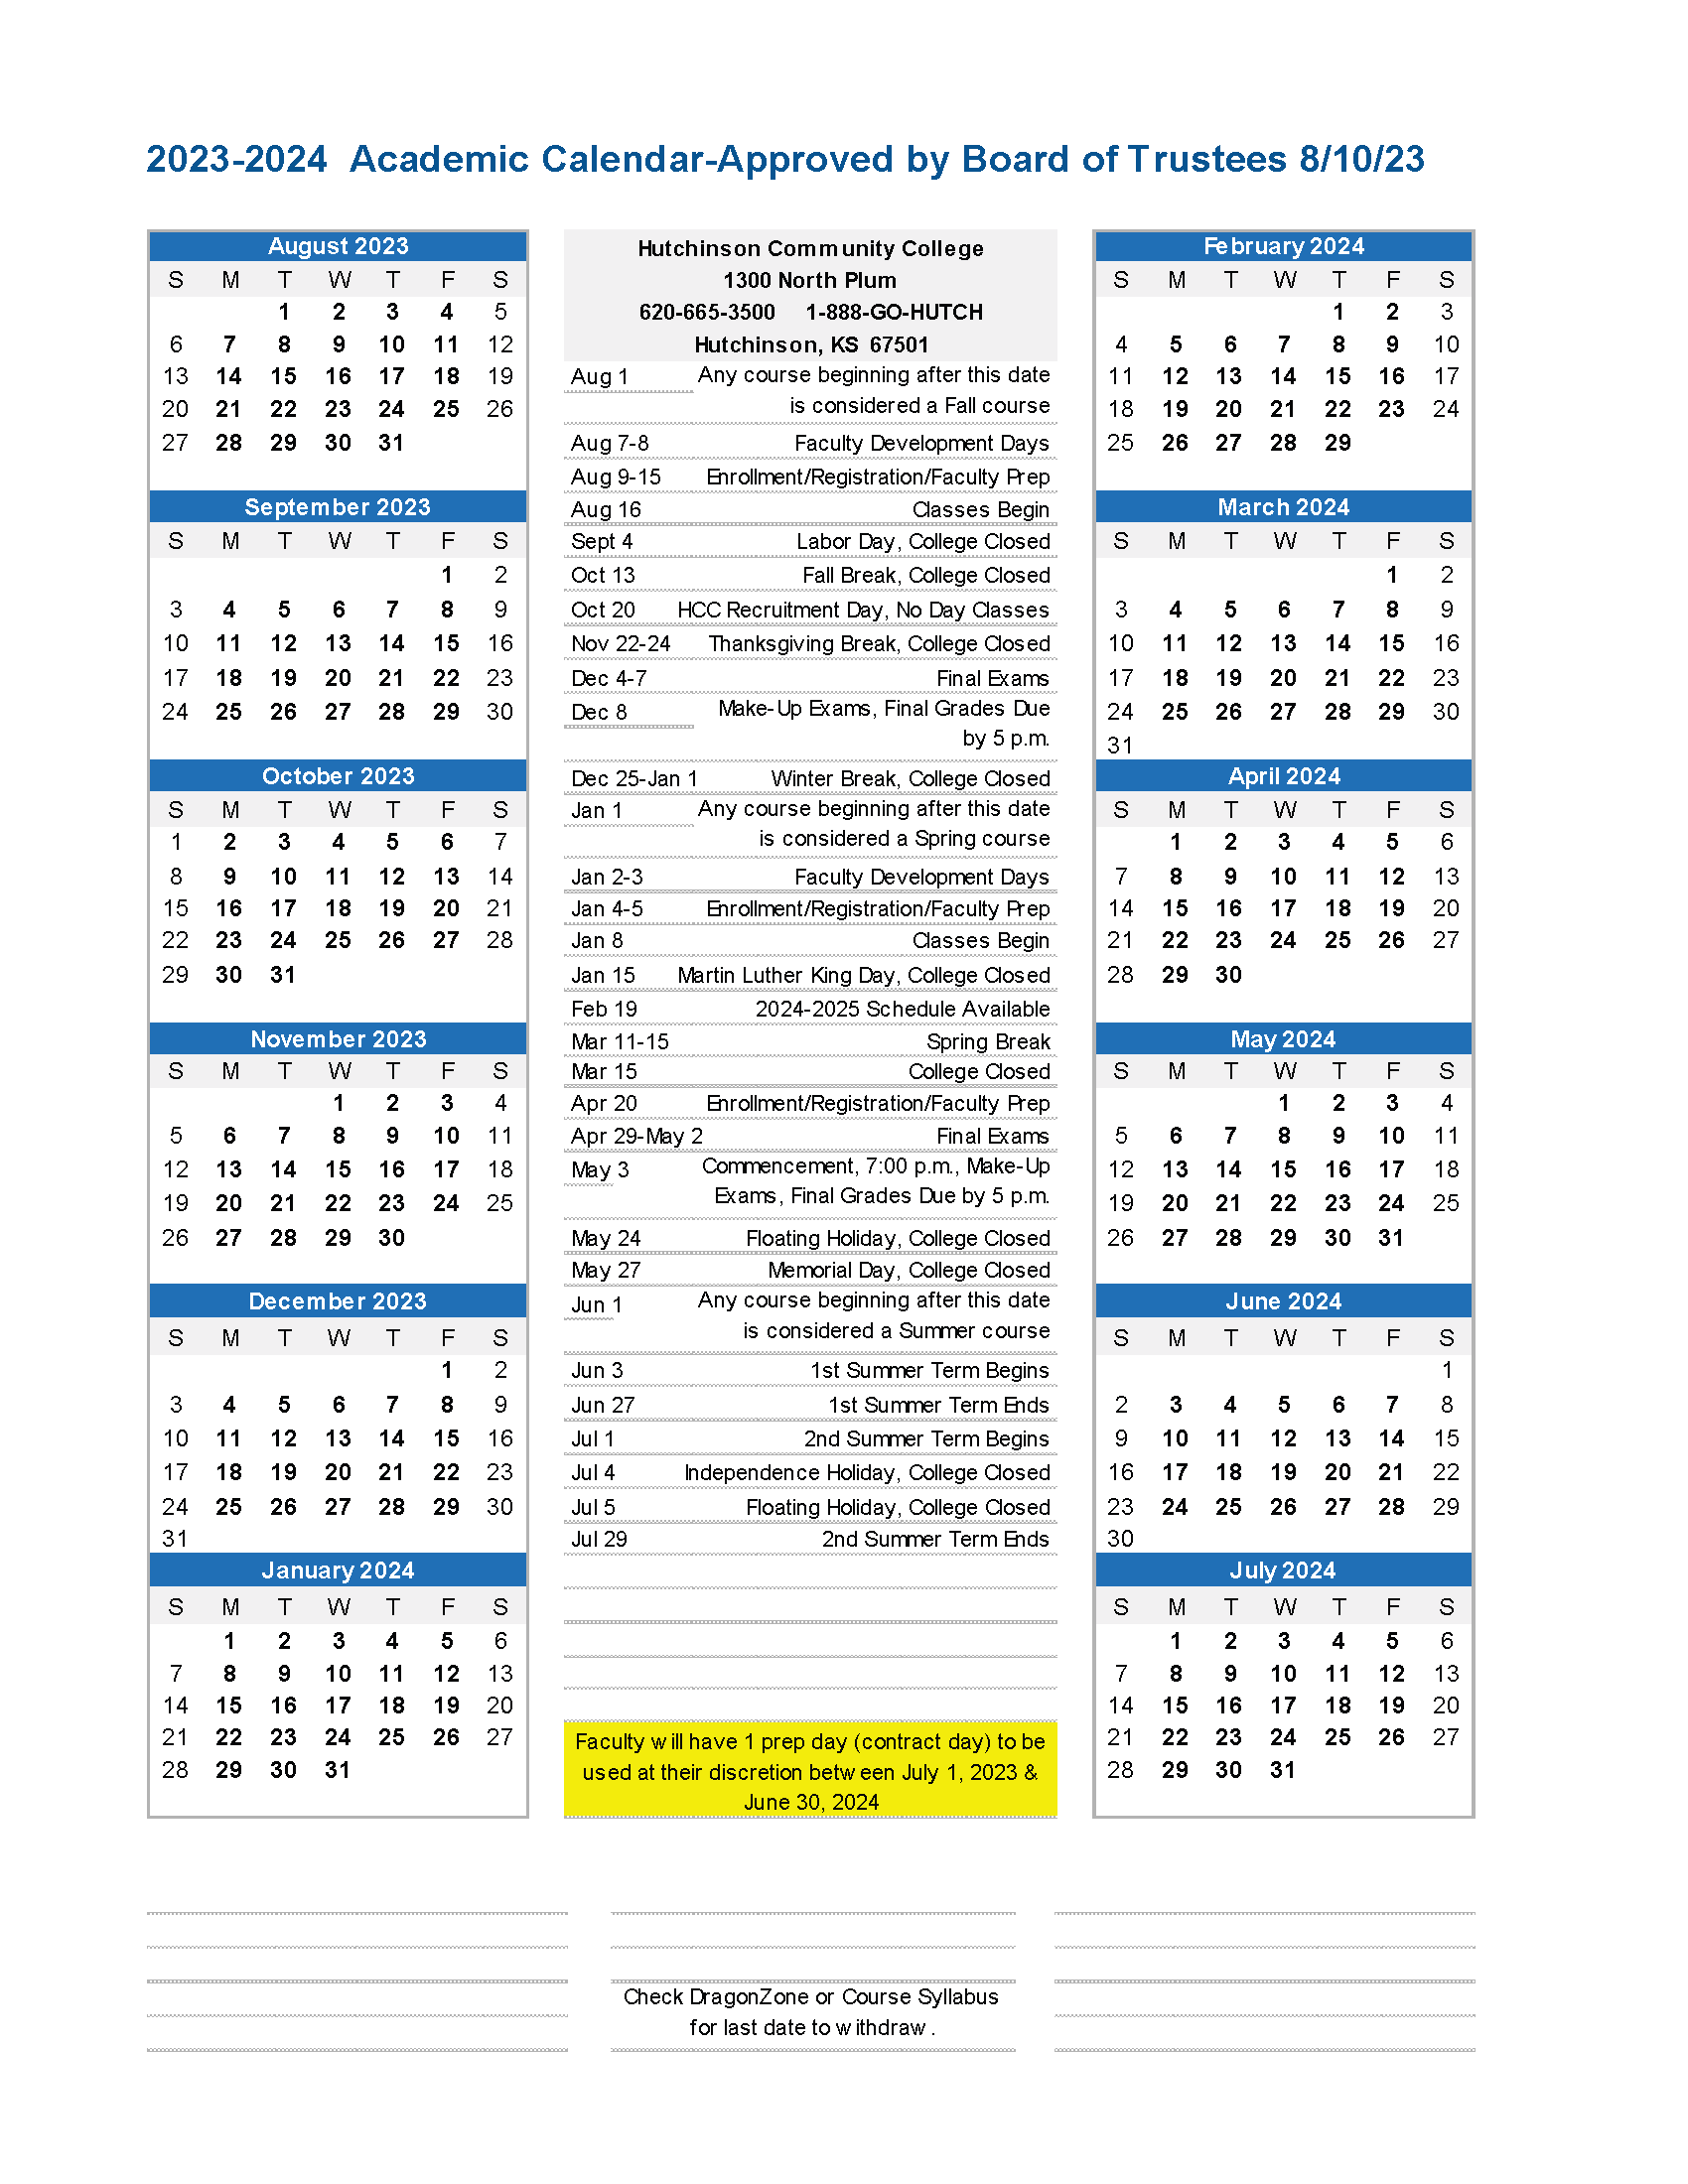 Academic Calendar - 2023-2024